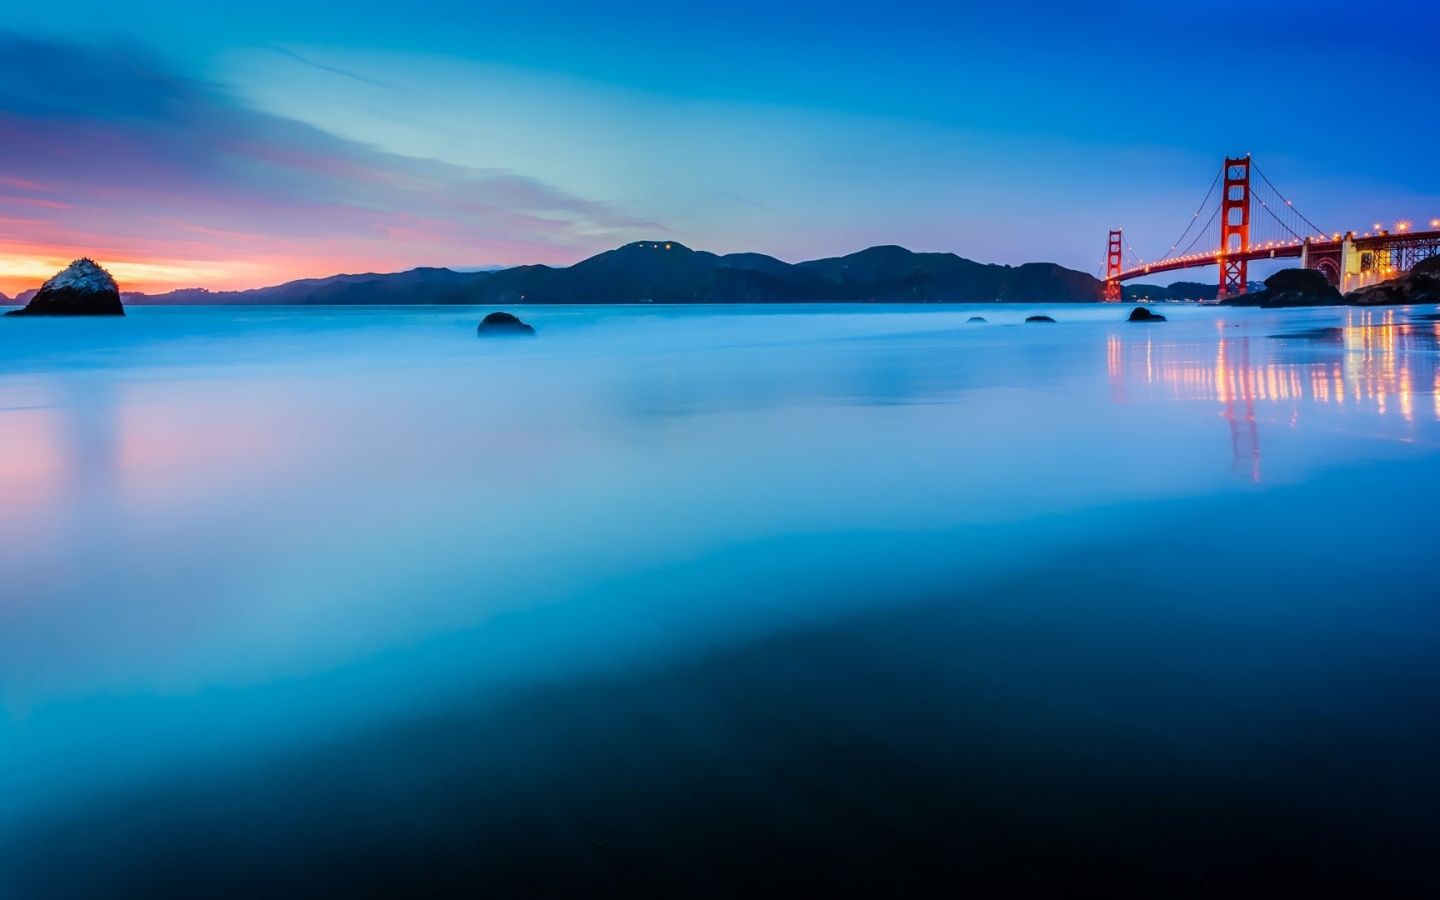 Macbook Air Backgrounds Free Download Golden Gate Bridge - San Francisco Bay Ocean - HD Wallpaper 